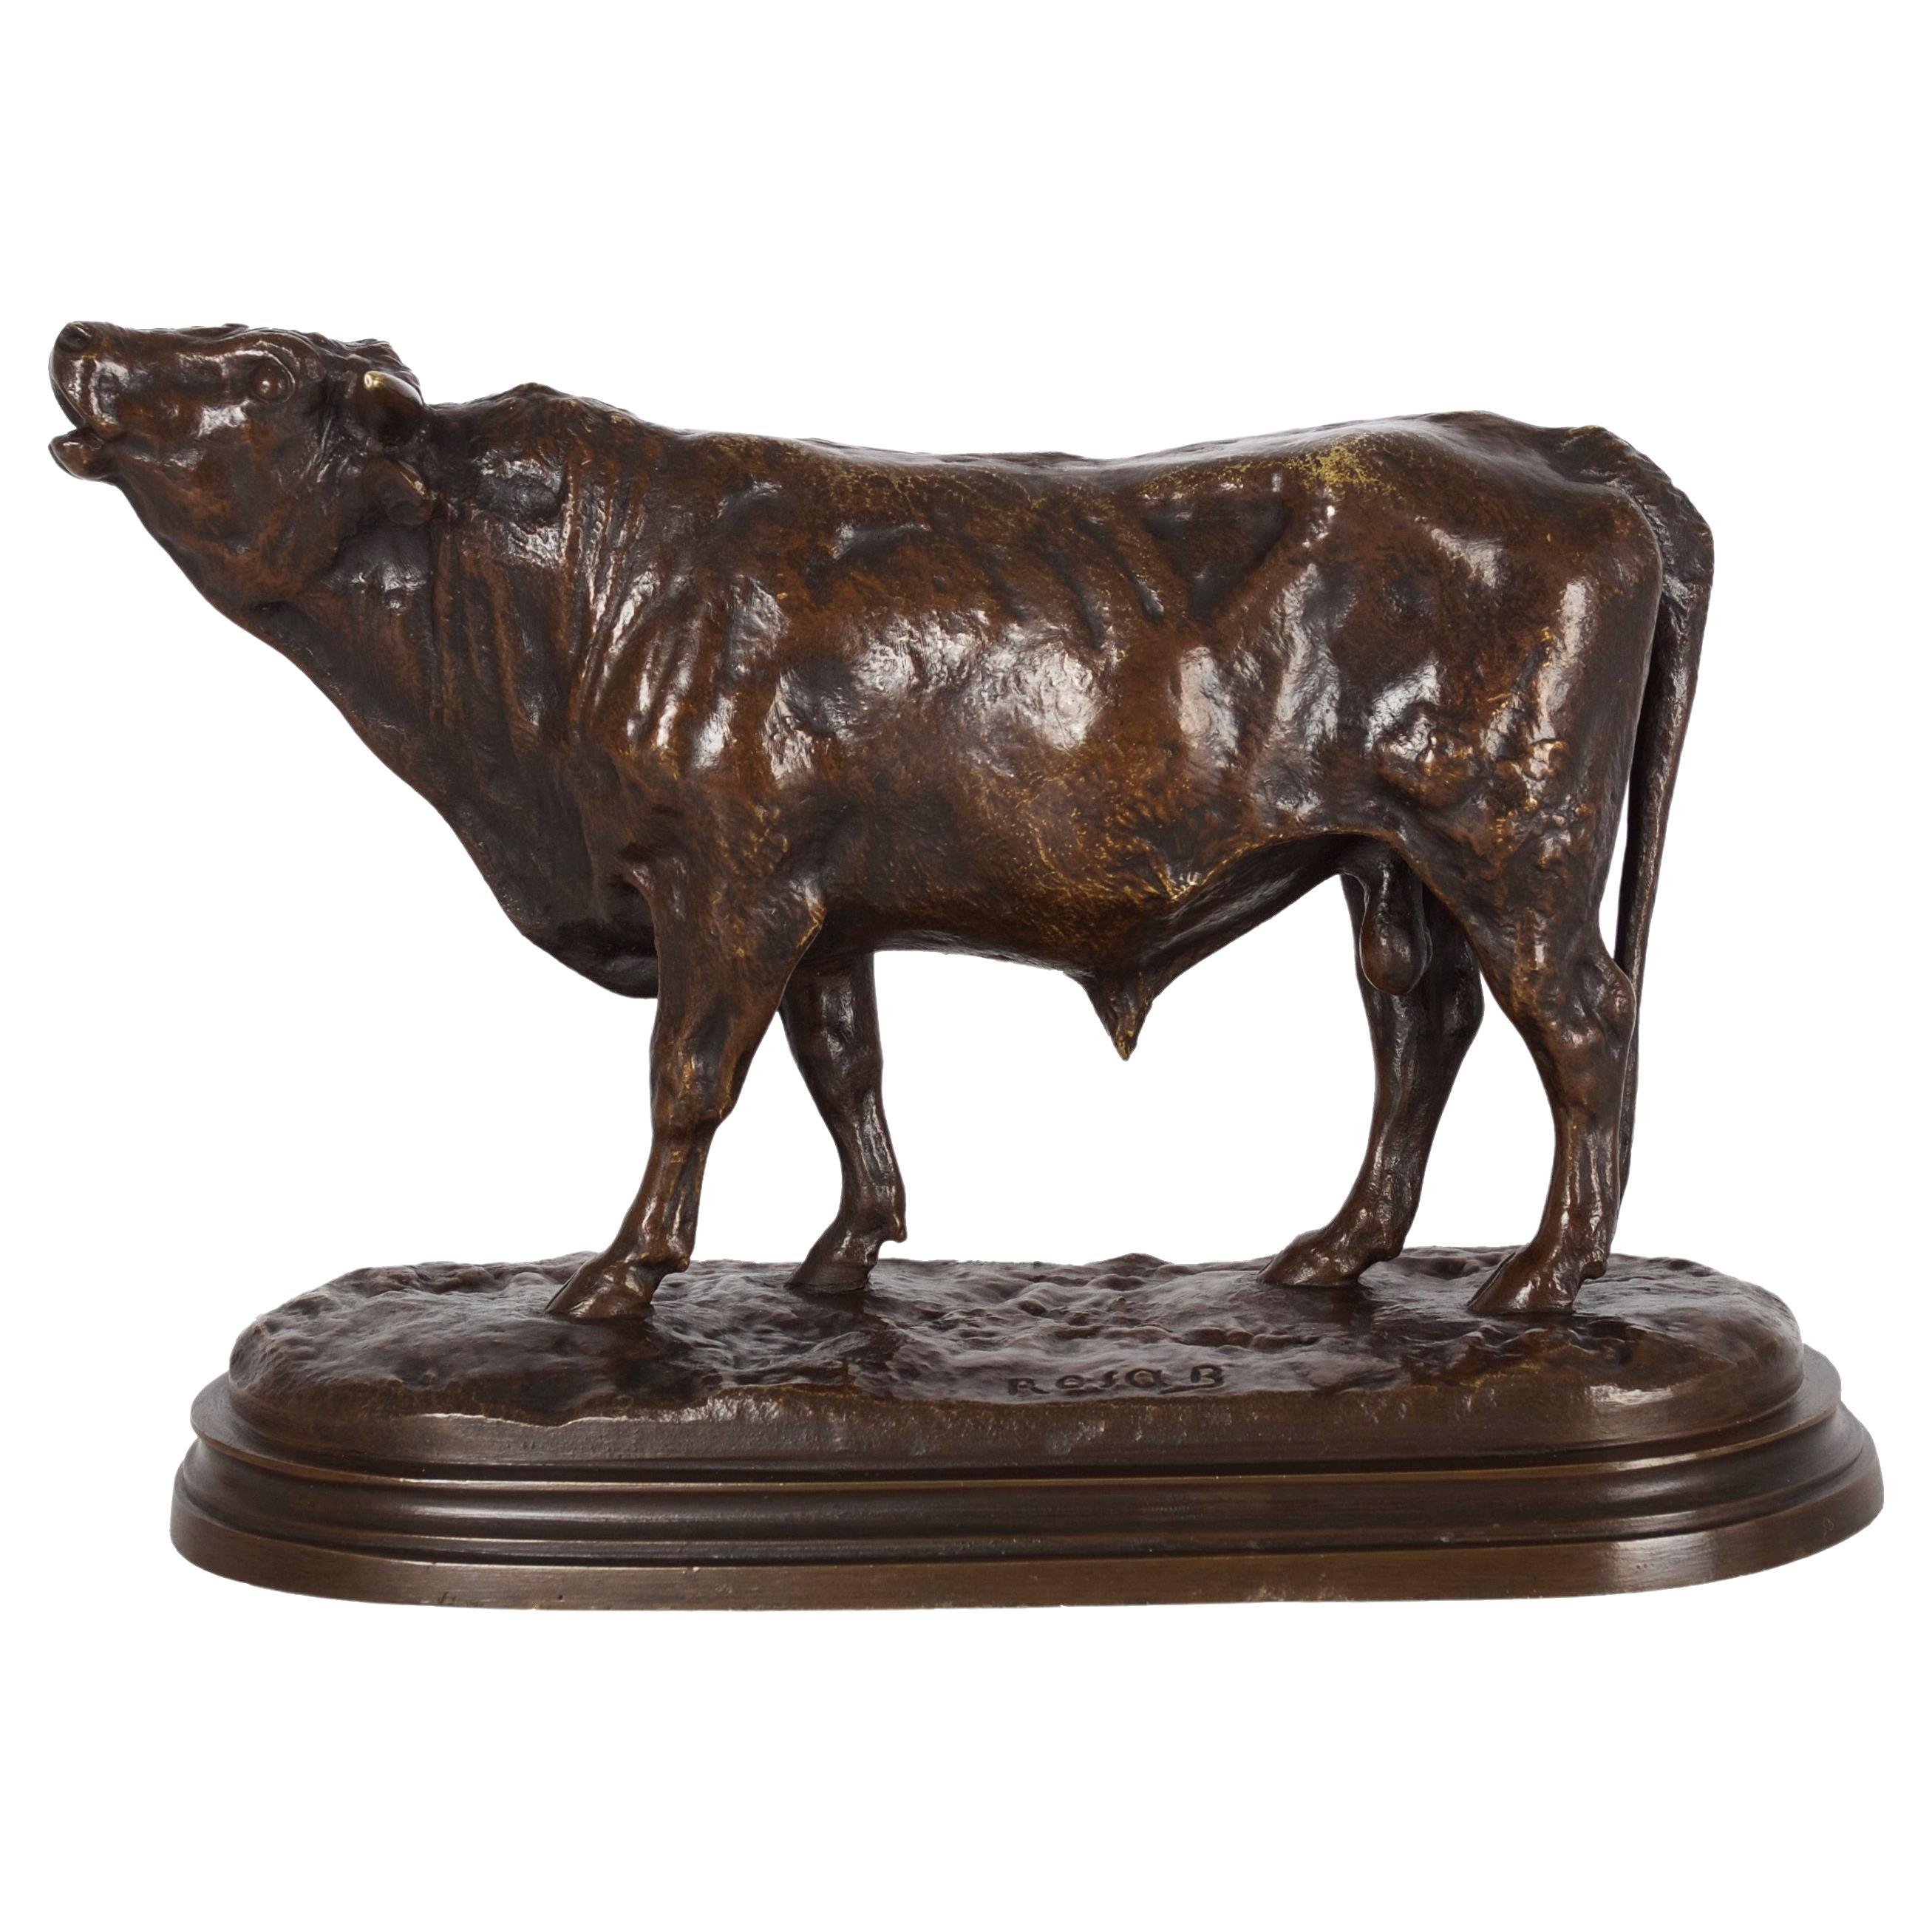 Authentic French Antique Bronze Sculpture"Bellowing Bull"by Rosa Bonheur, c.1860